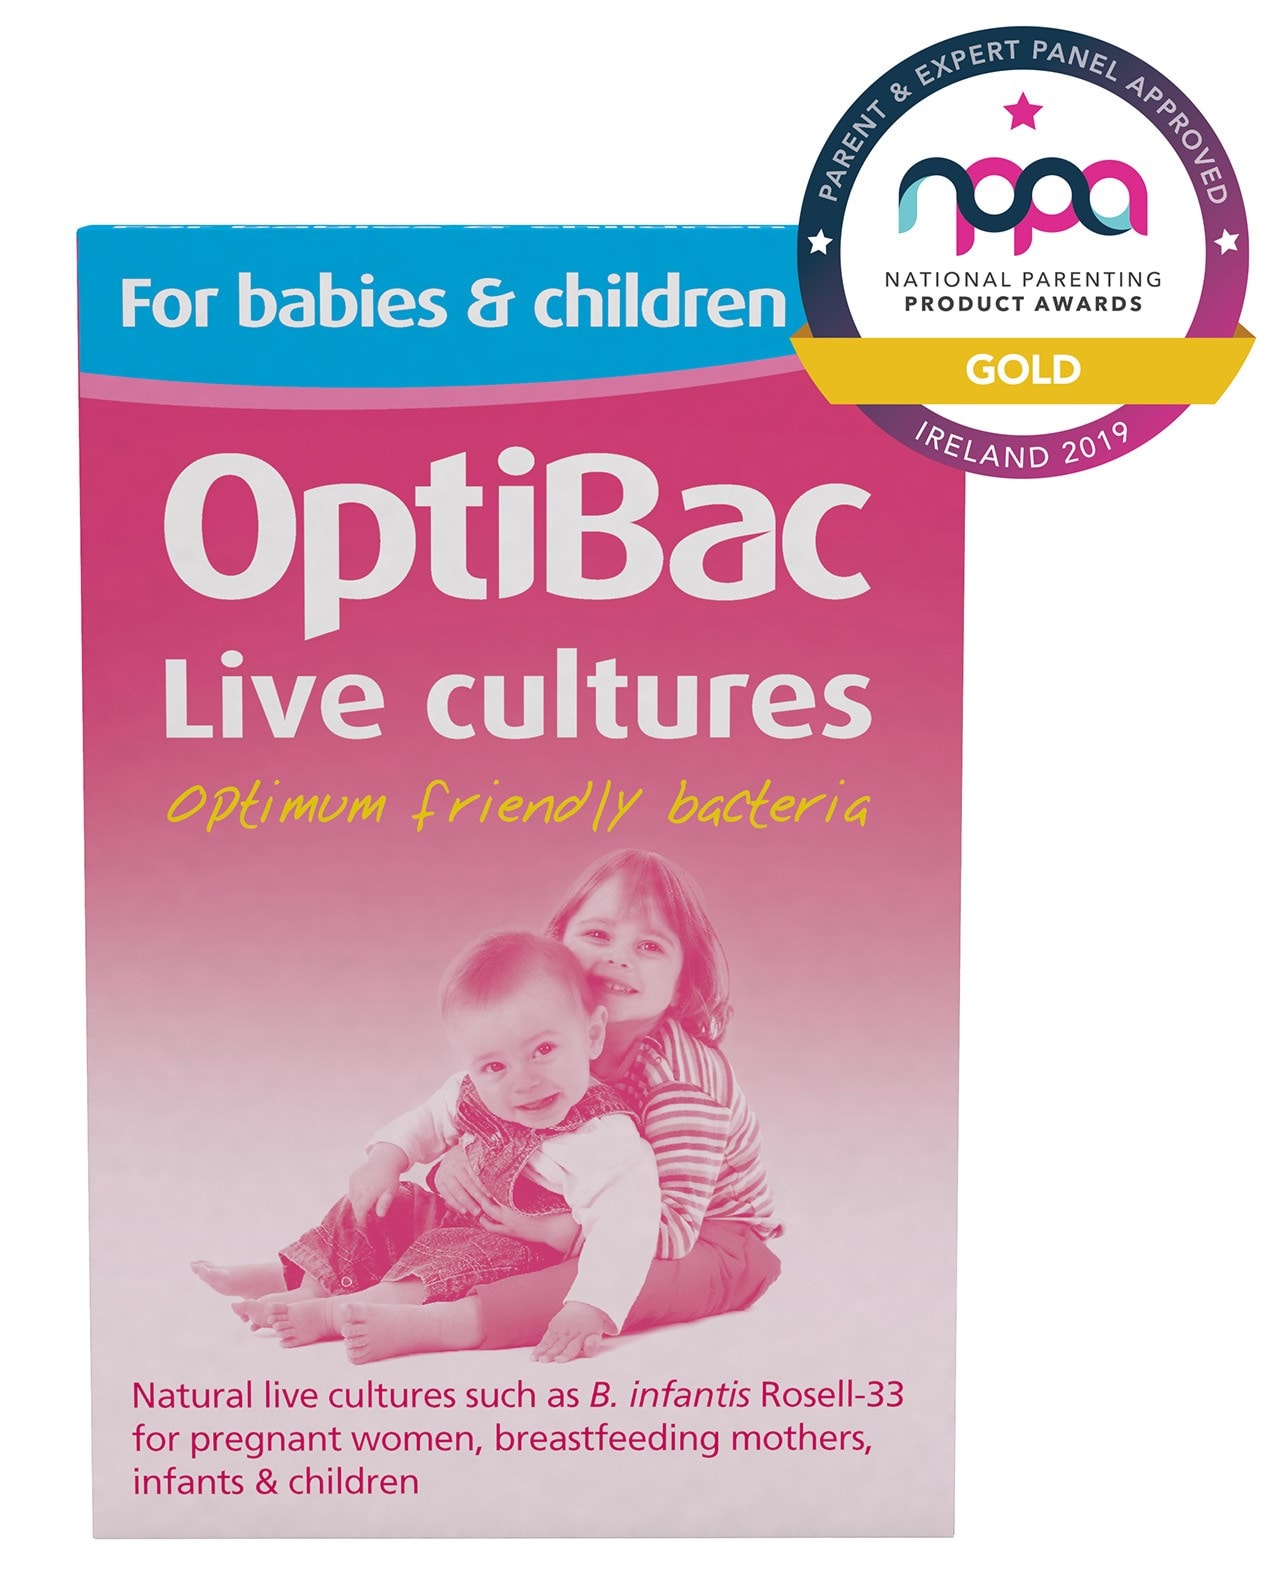 Optibac 'For babies & children' award 2019